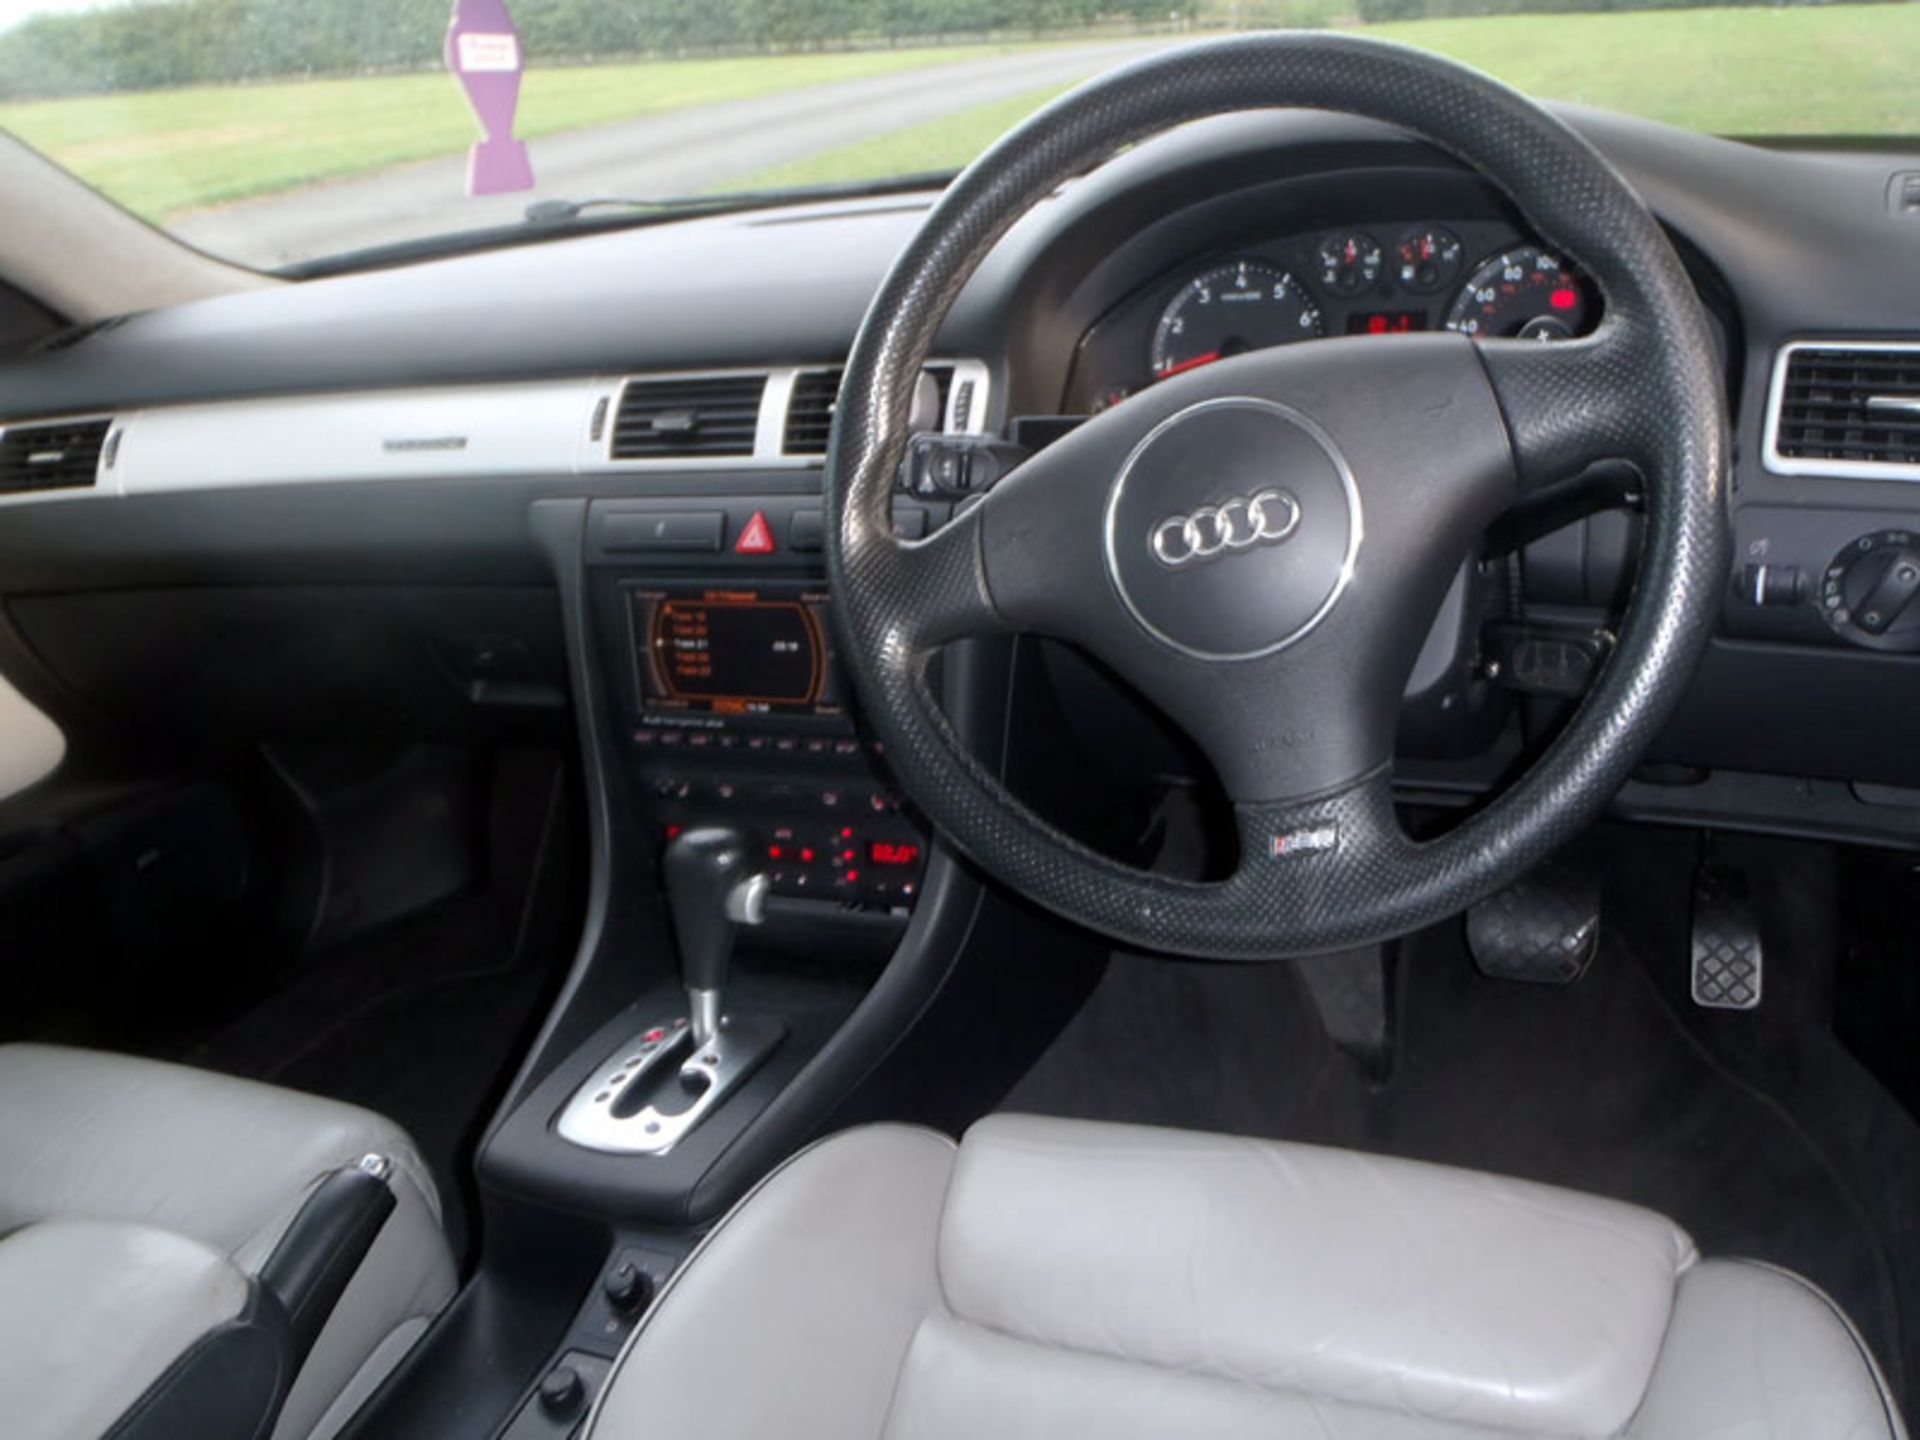 2003 Audi RS6 Avant - Image 3 of 4